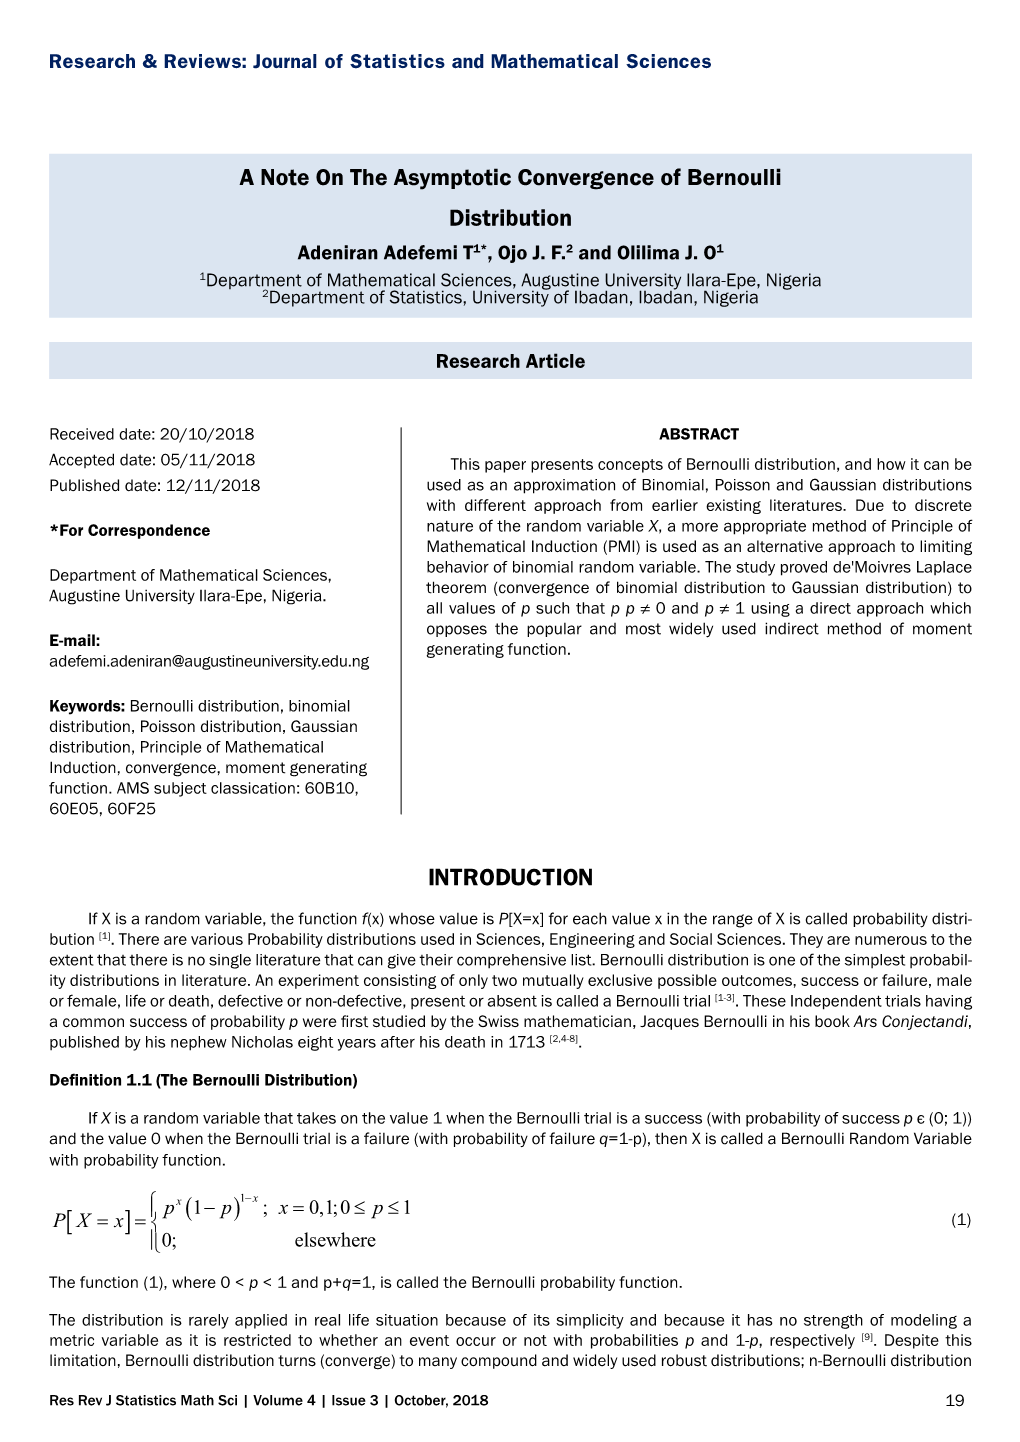 A Note on the Asymptotic Convergence of Bernoulli Distribution Adeniran Adefemi T1*, Ojo J